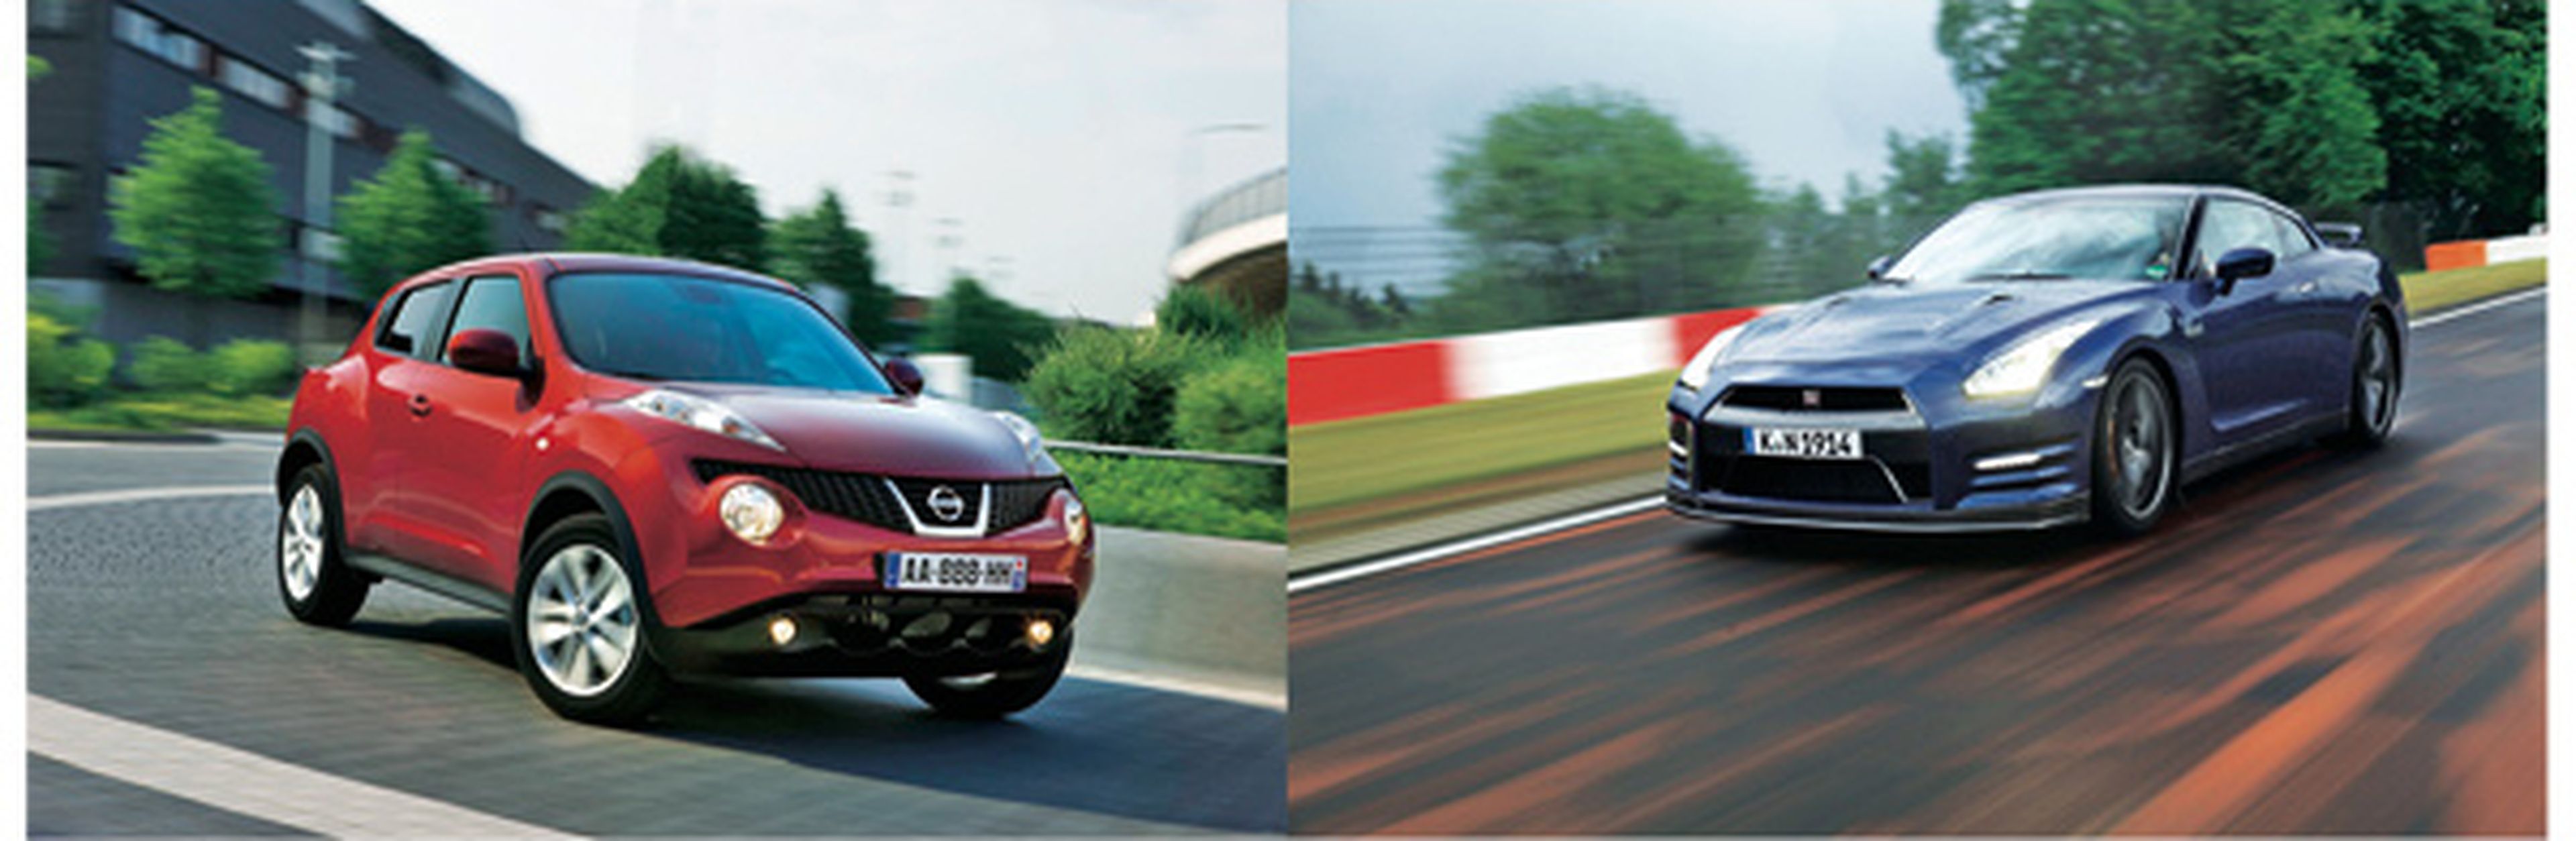 Nissan Juke y Nissan GT-R